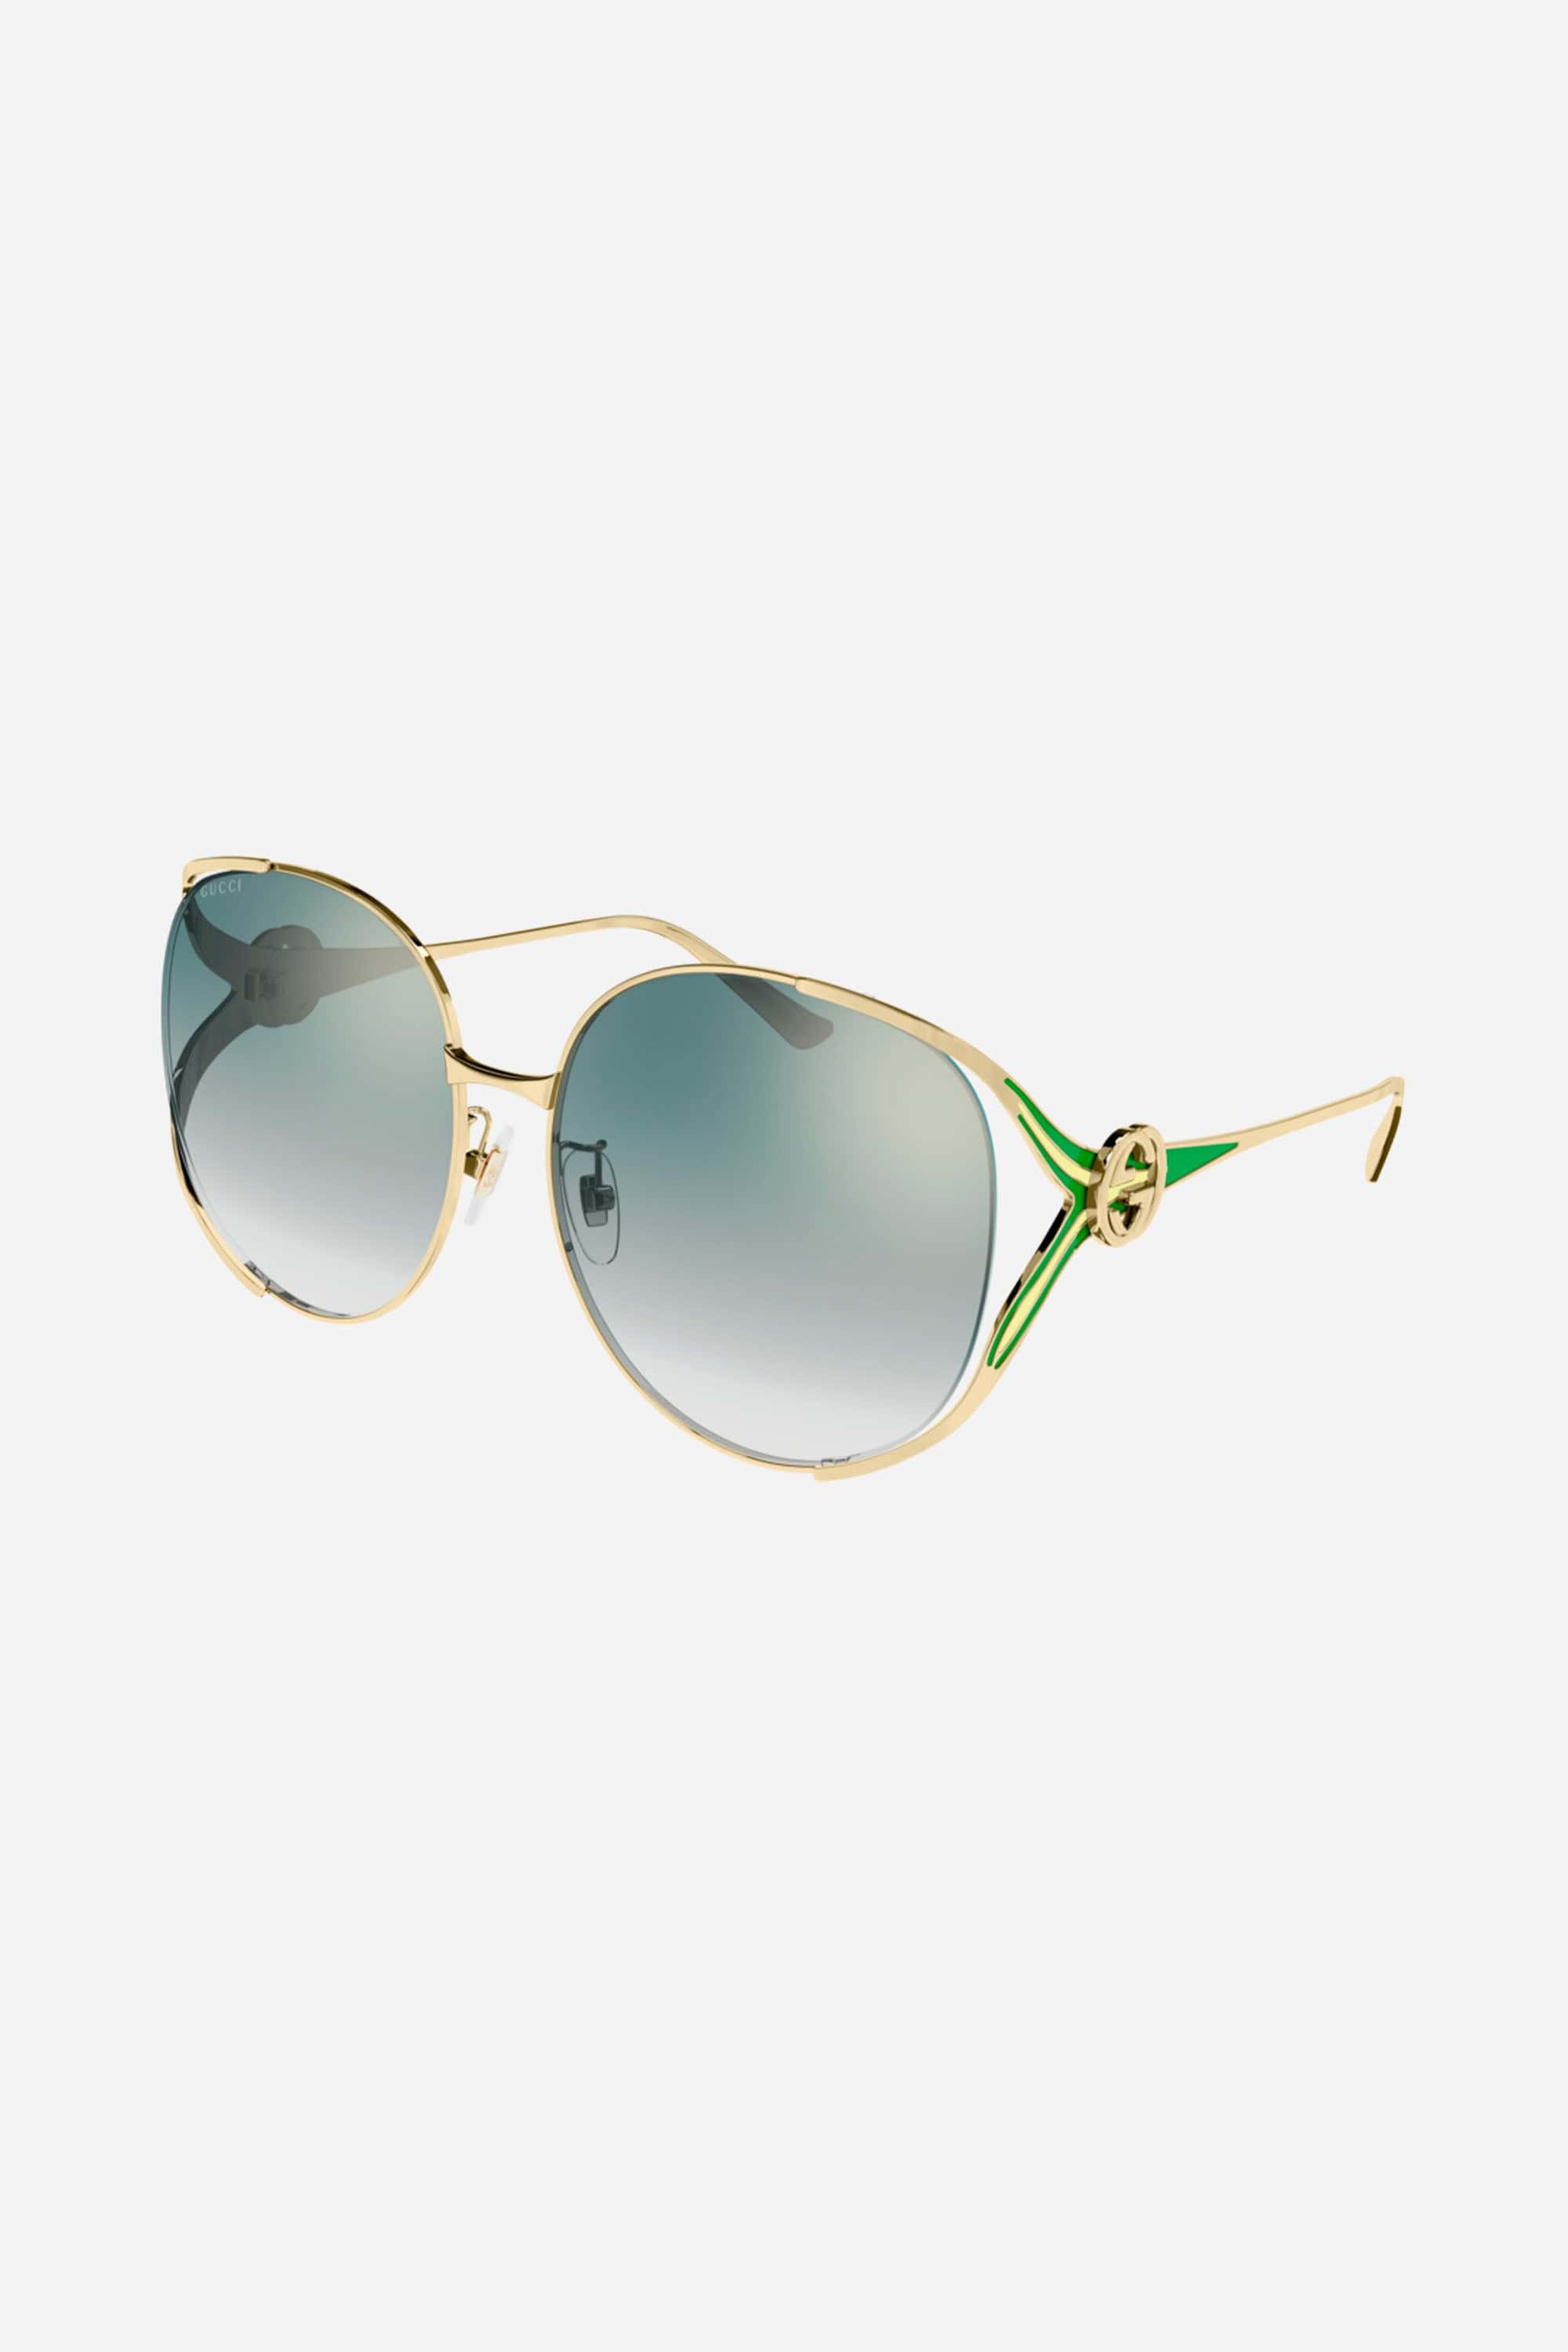 Gucci fork metal green sunglasses - Eyewear Club